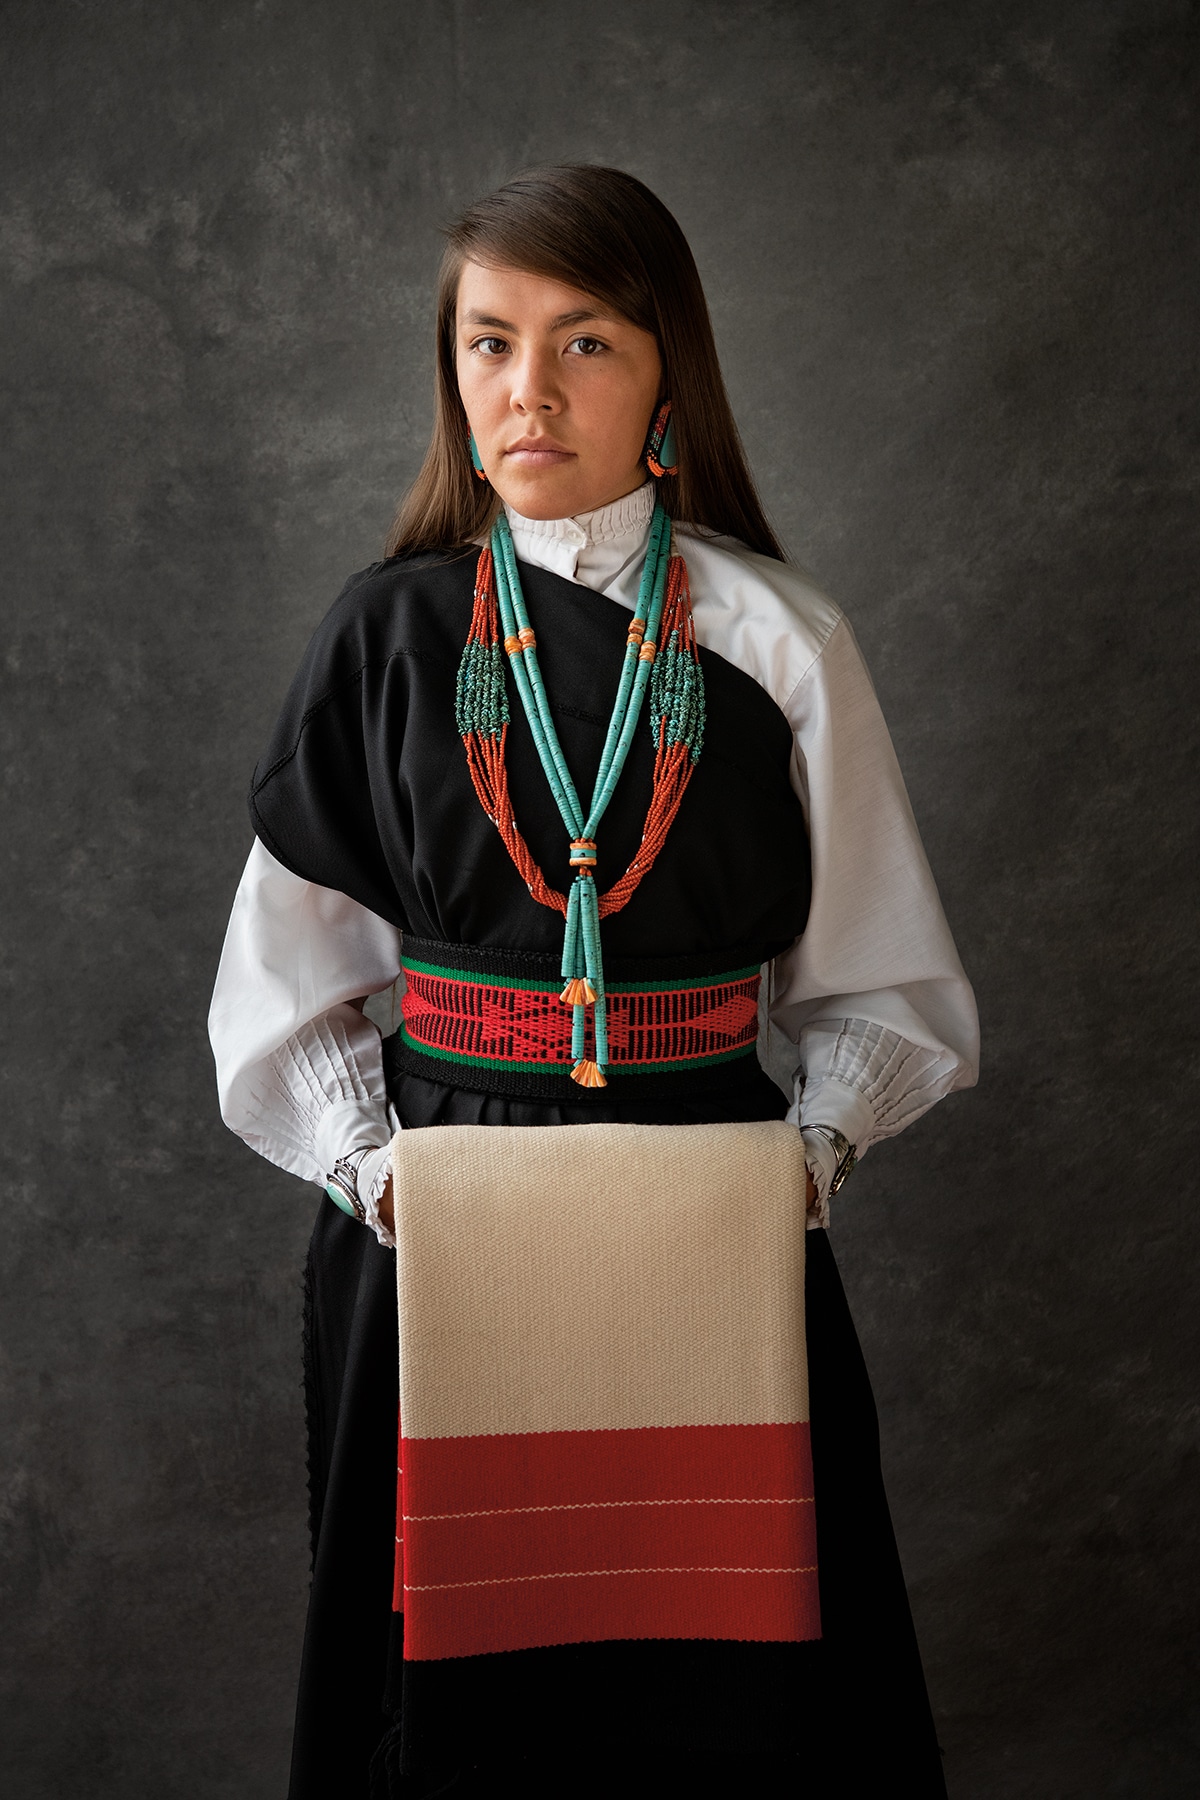 Portrait of Native American Girl by Craig Varjabedian